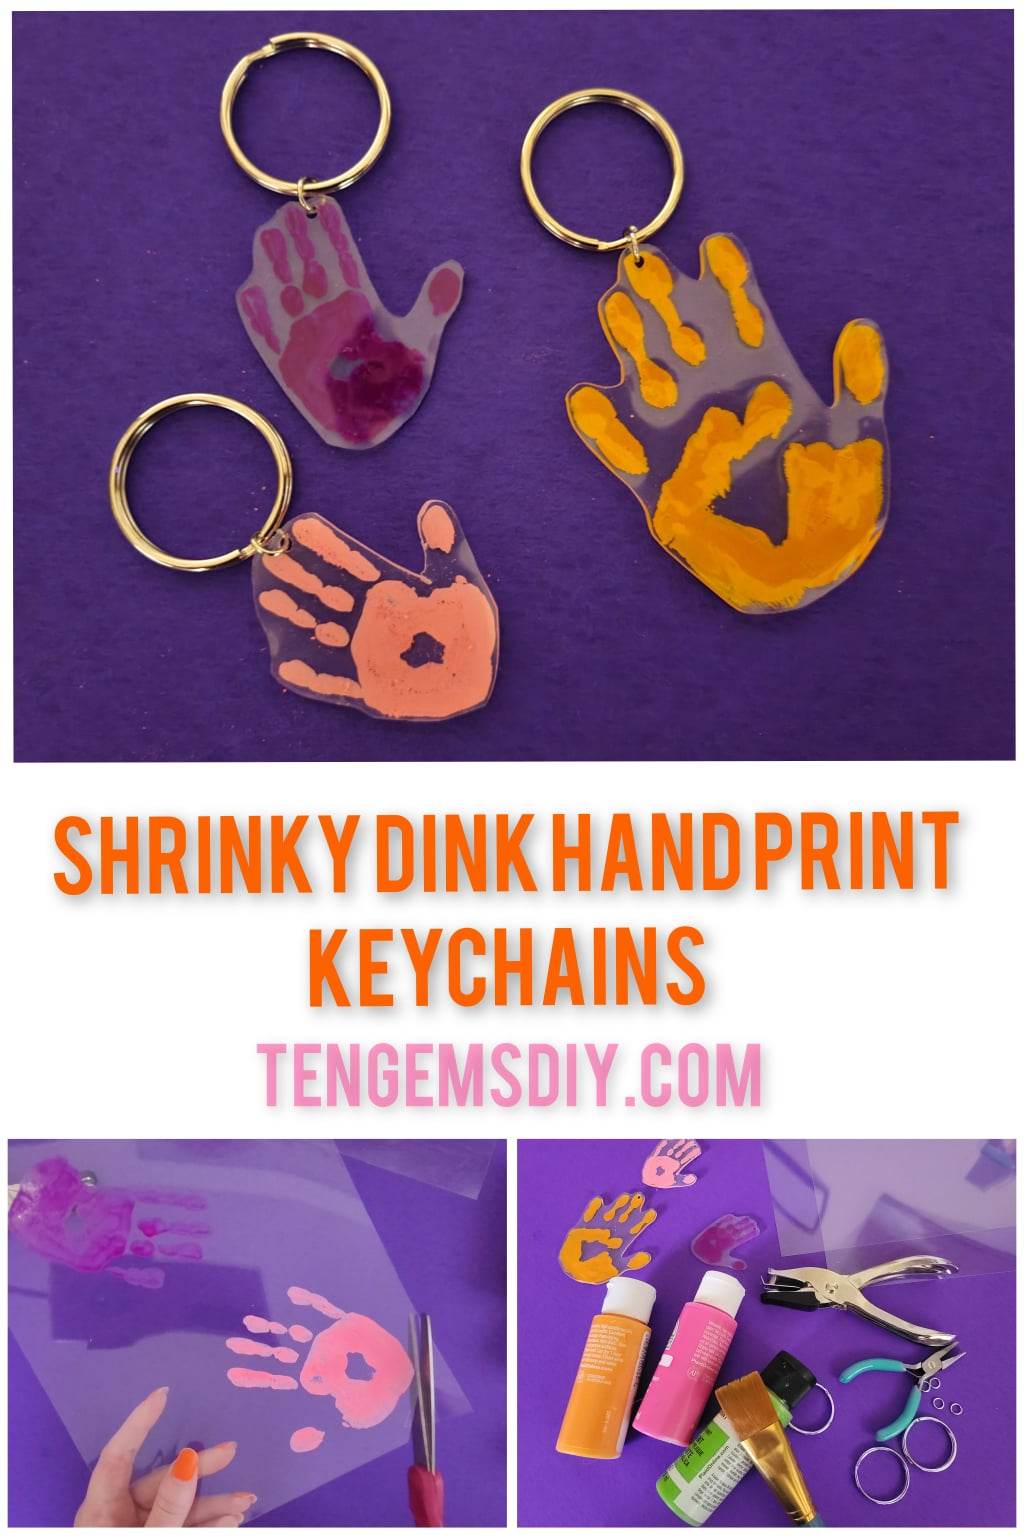 How to Make Shrinky Dinks Hanprint Flower Keychain 